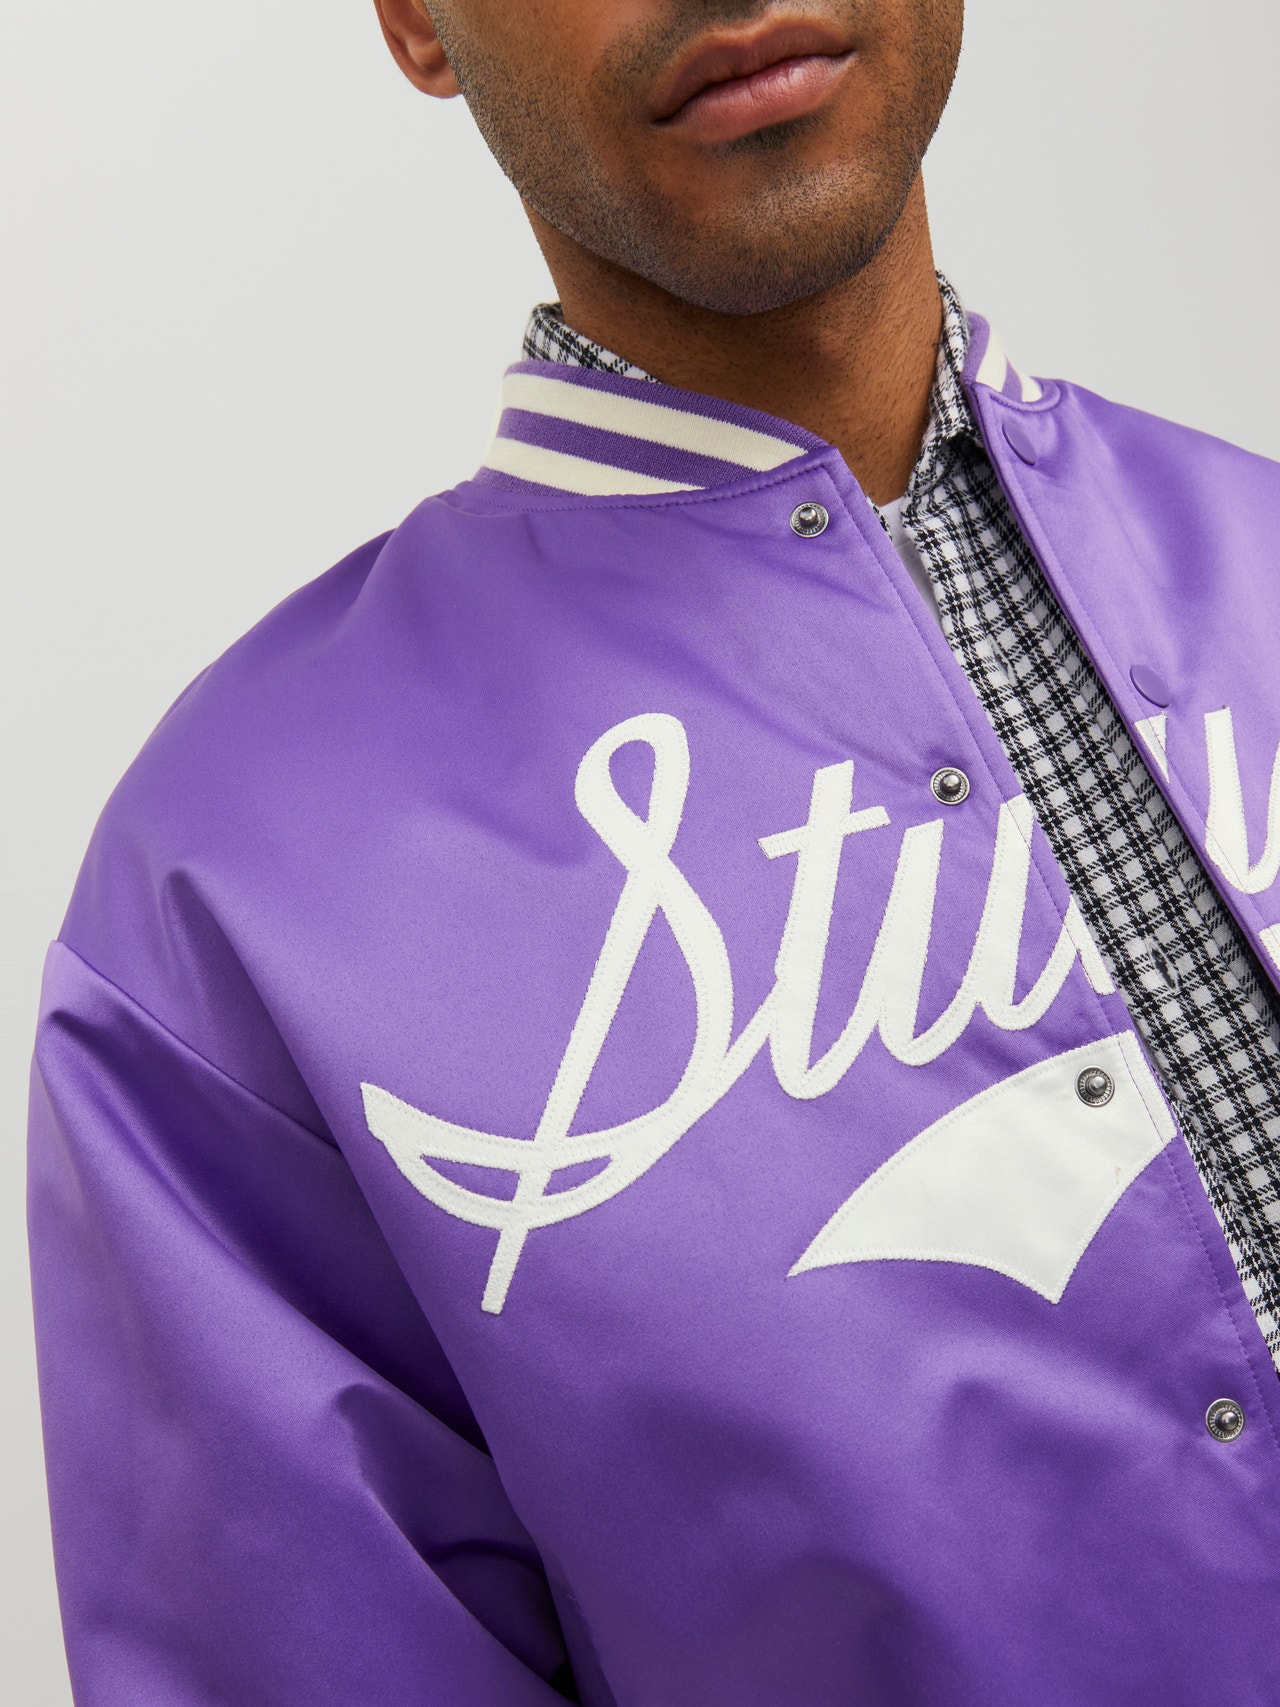 baseball jacket purple